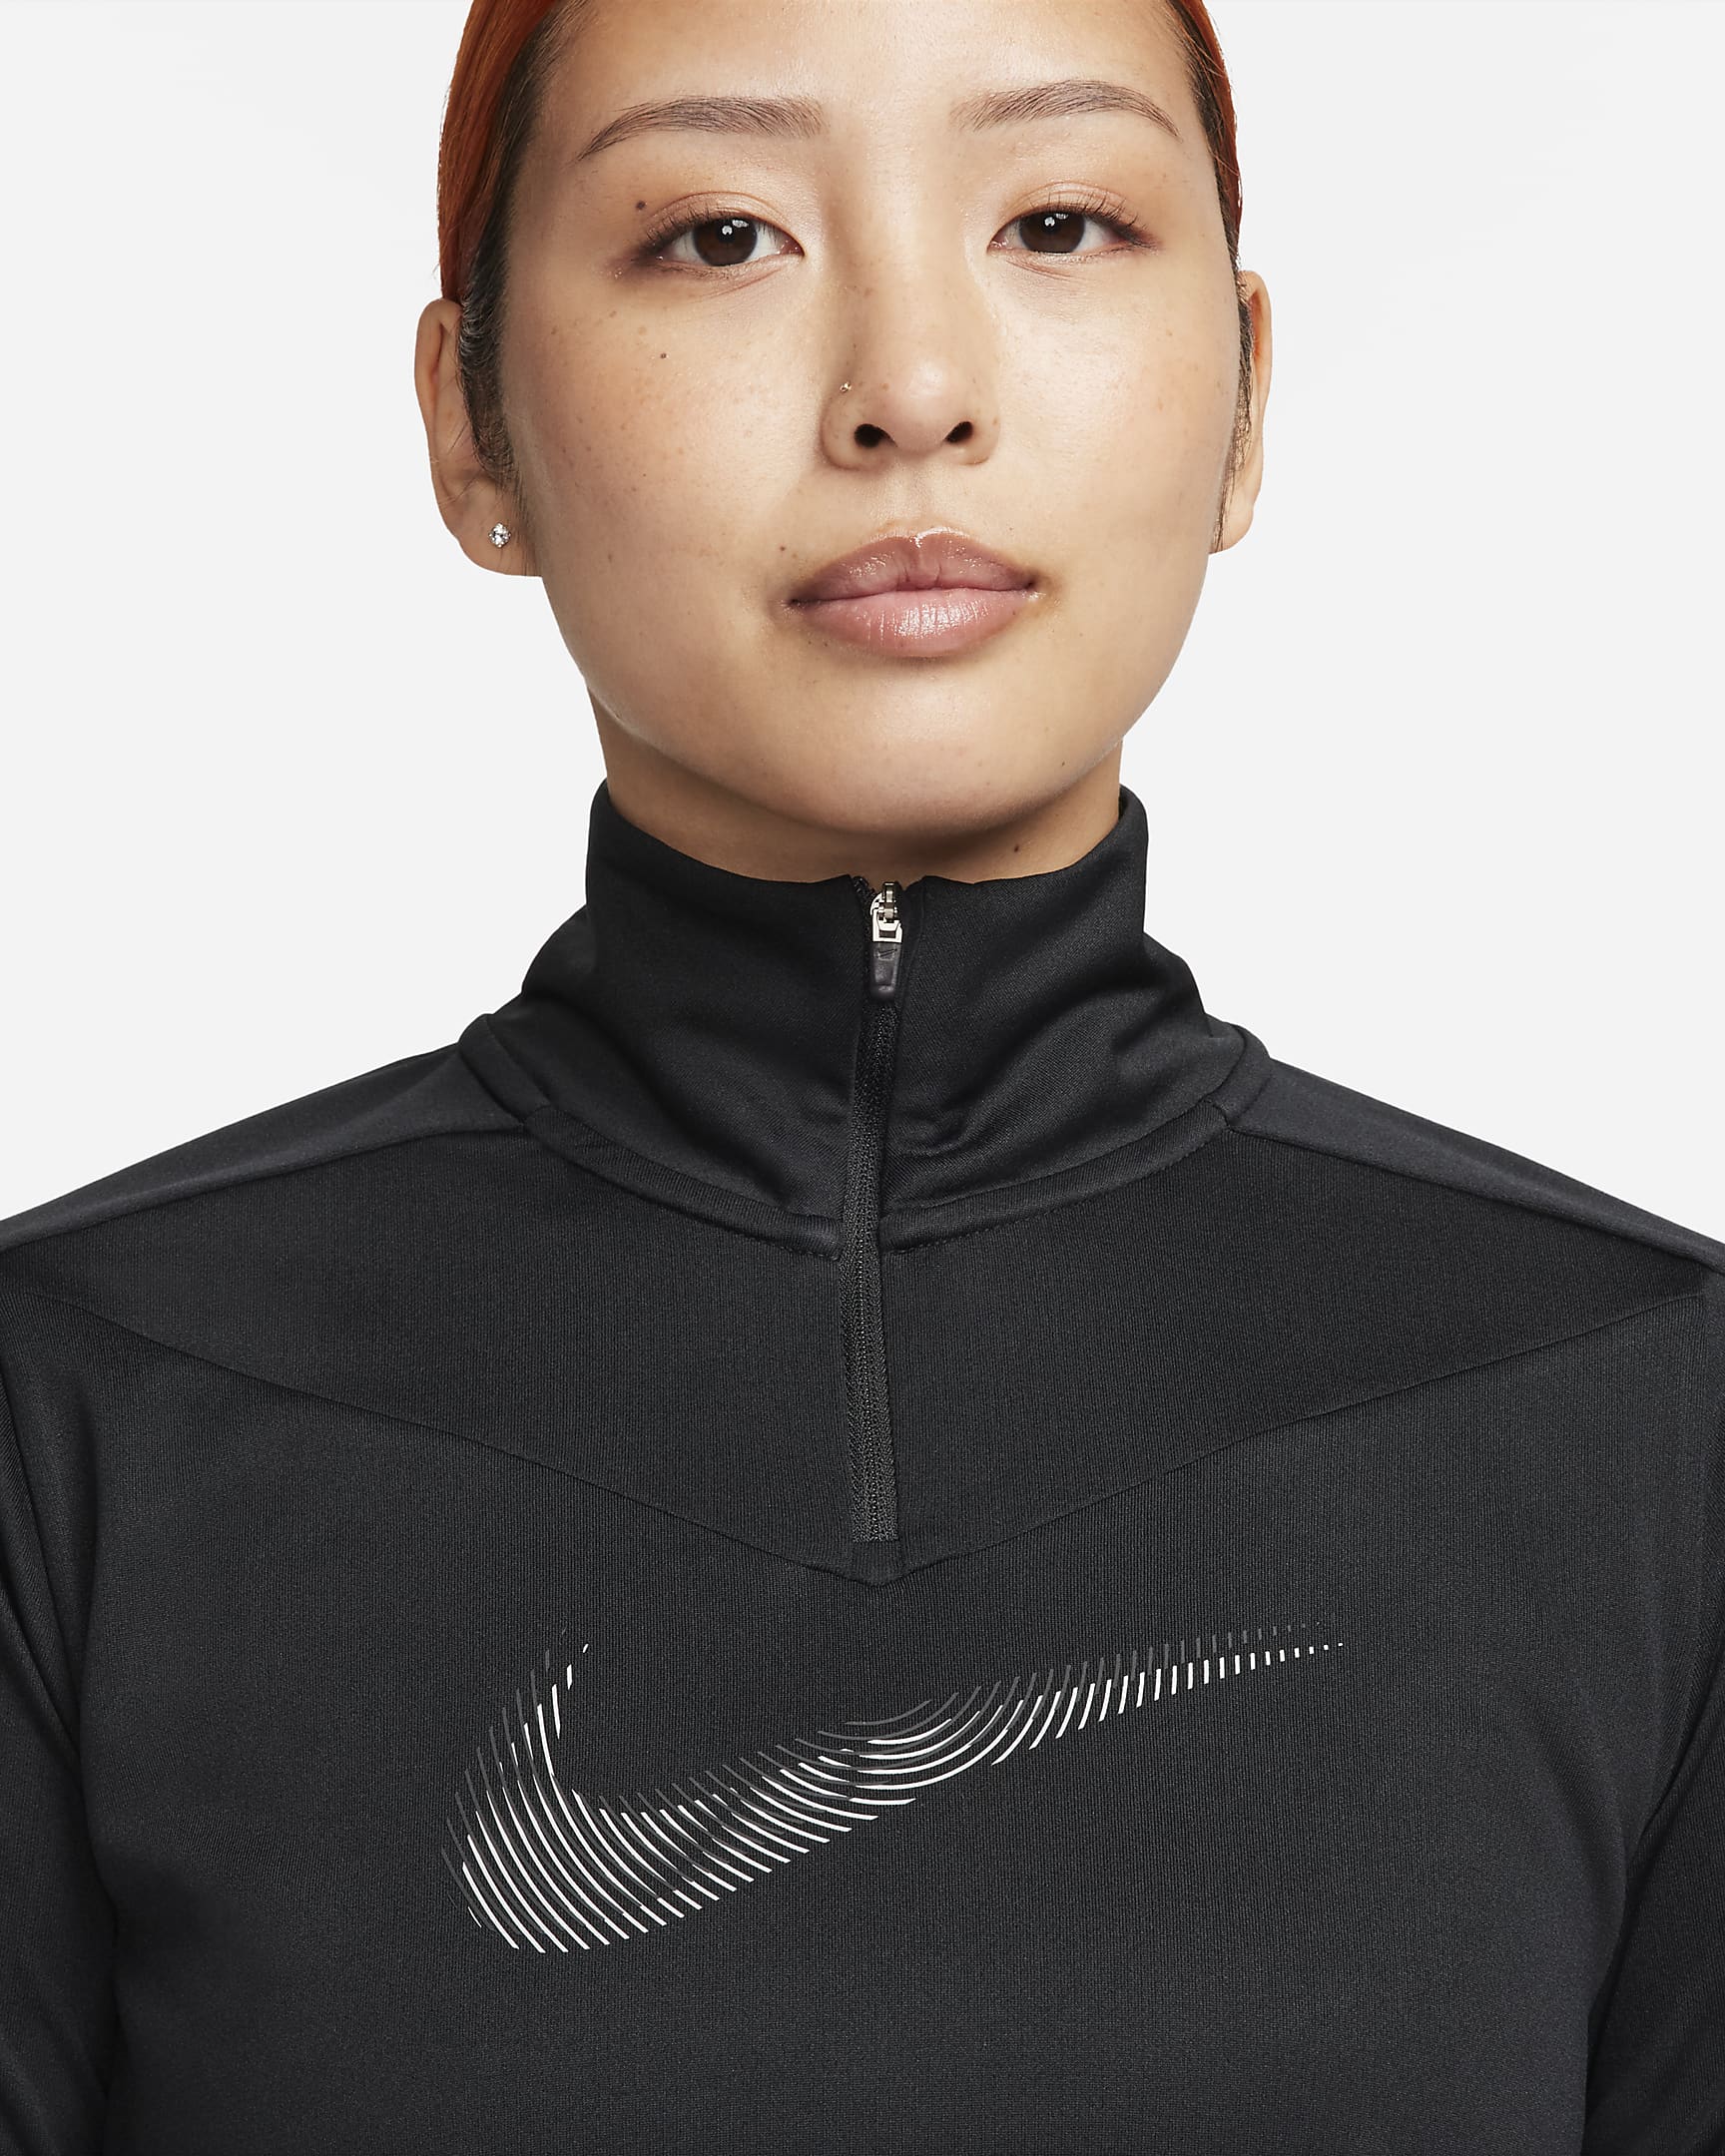 Nike Dri-FIT Swoosh Women's 1/4-Zip Running Top. Nike PH